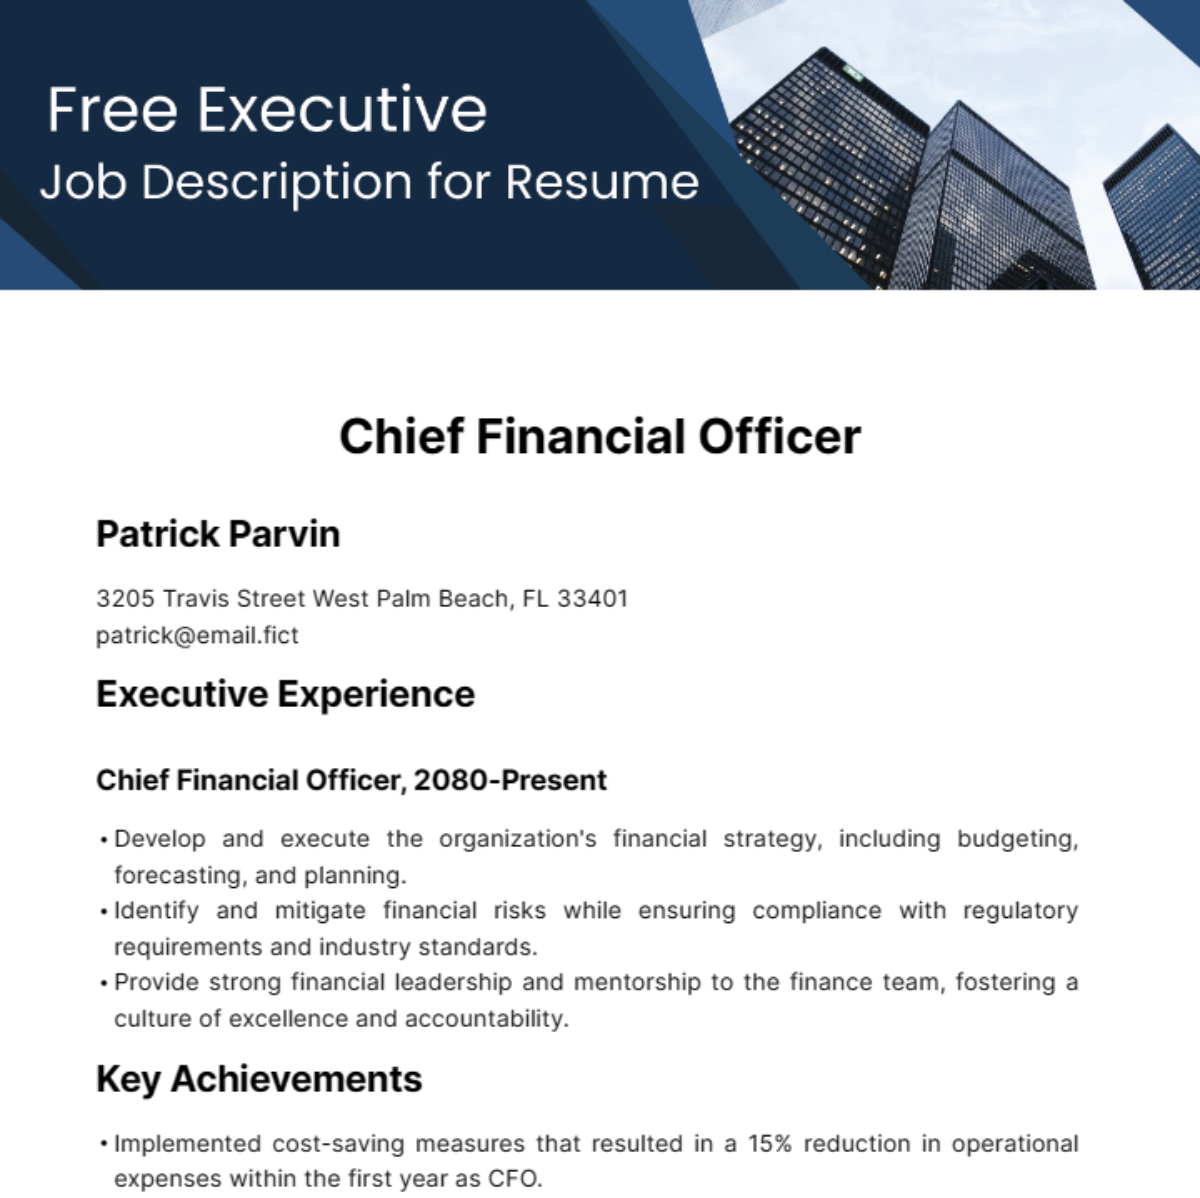 Free Executive Job Description for Resume Template